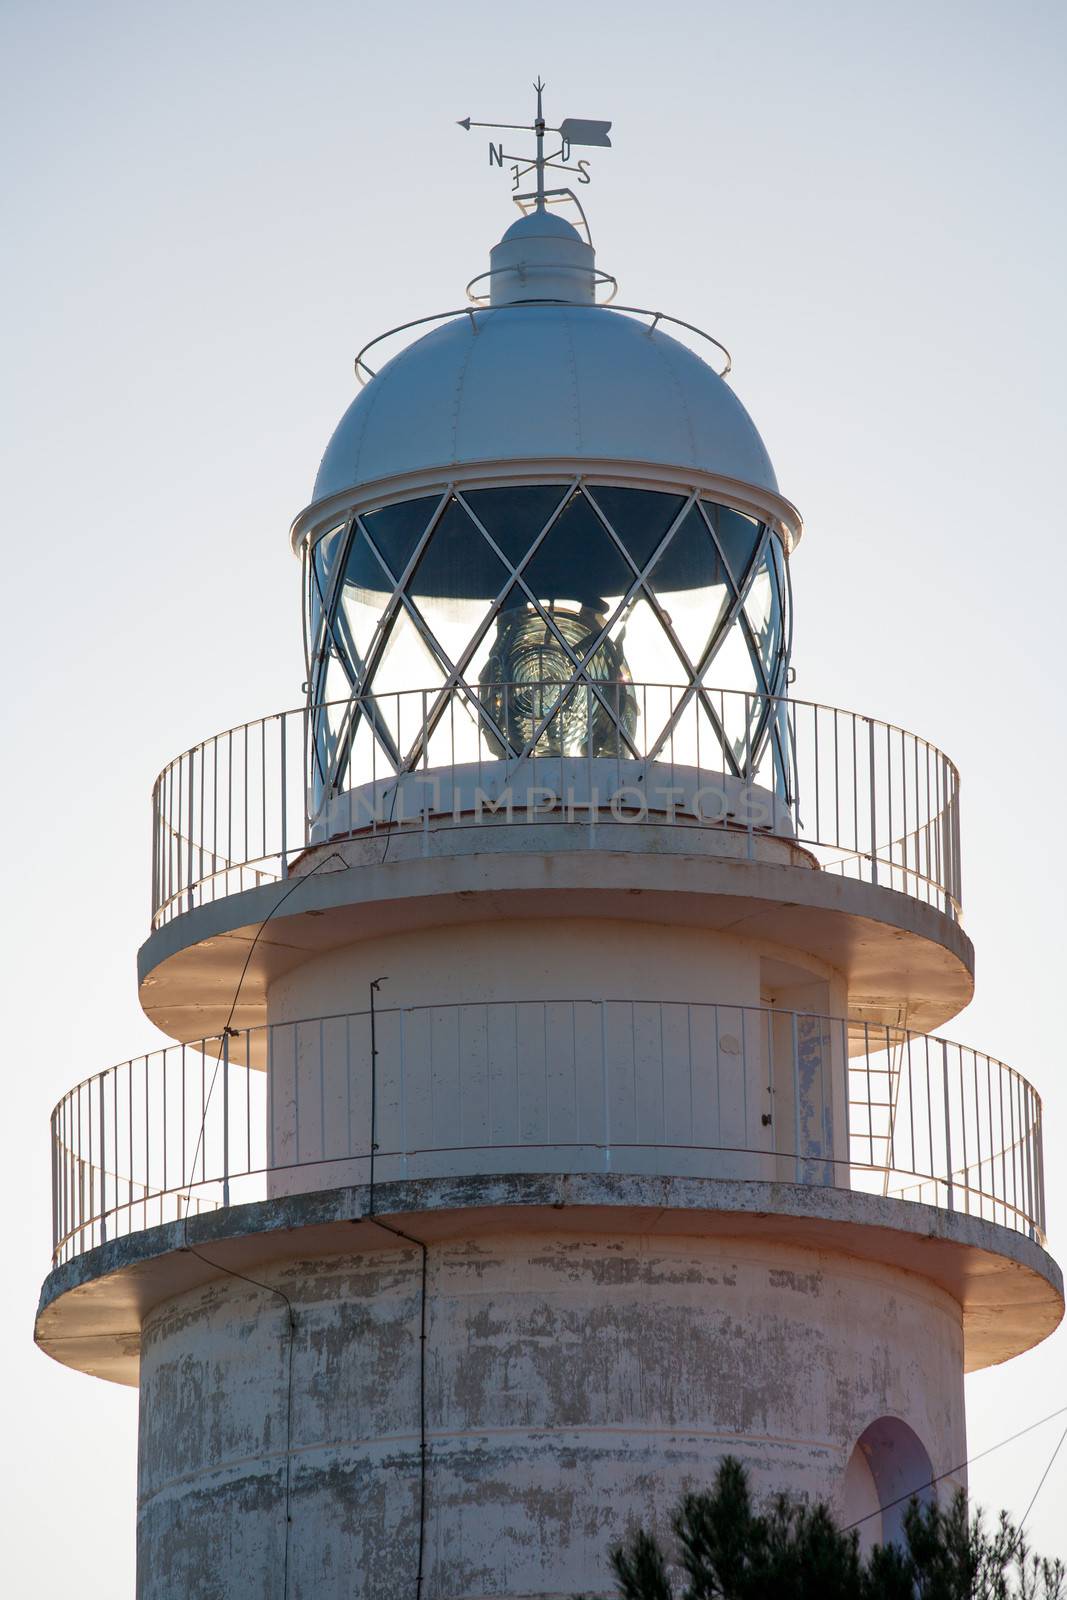 Cabo de San Antonio Cape Lighthouse in Denia Javea of Alicante by lunamarina